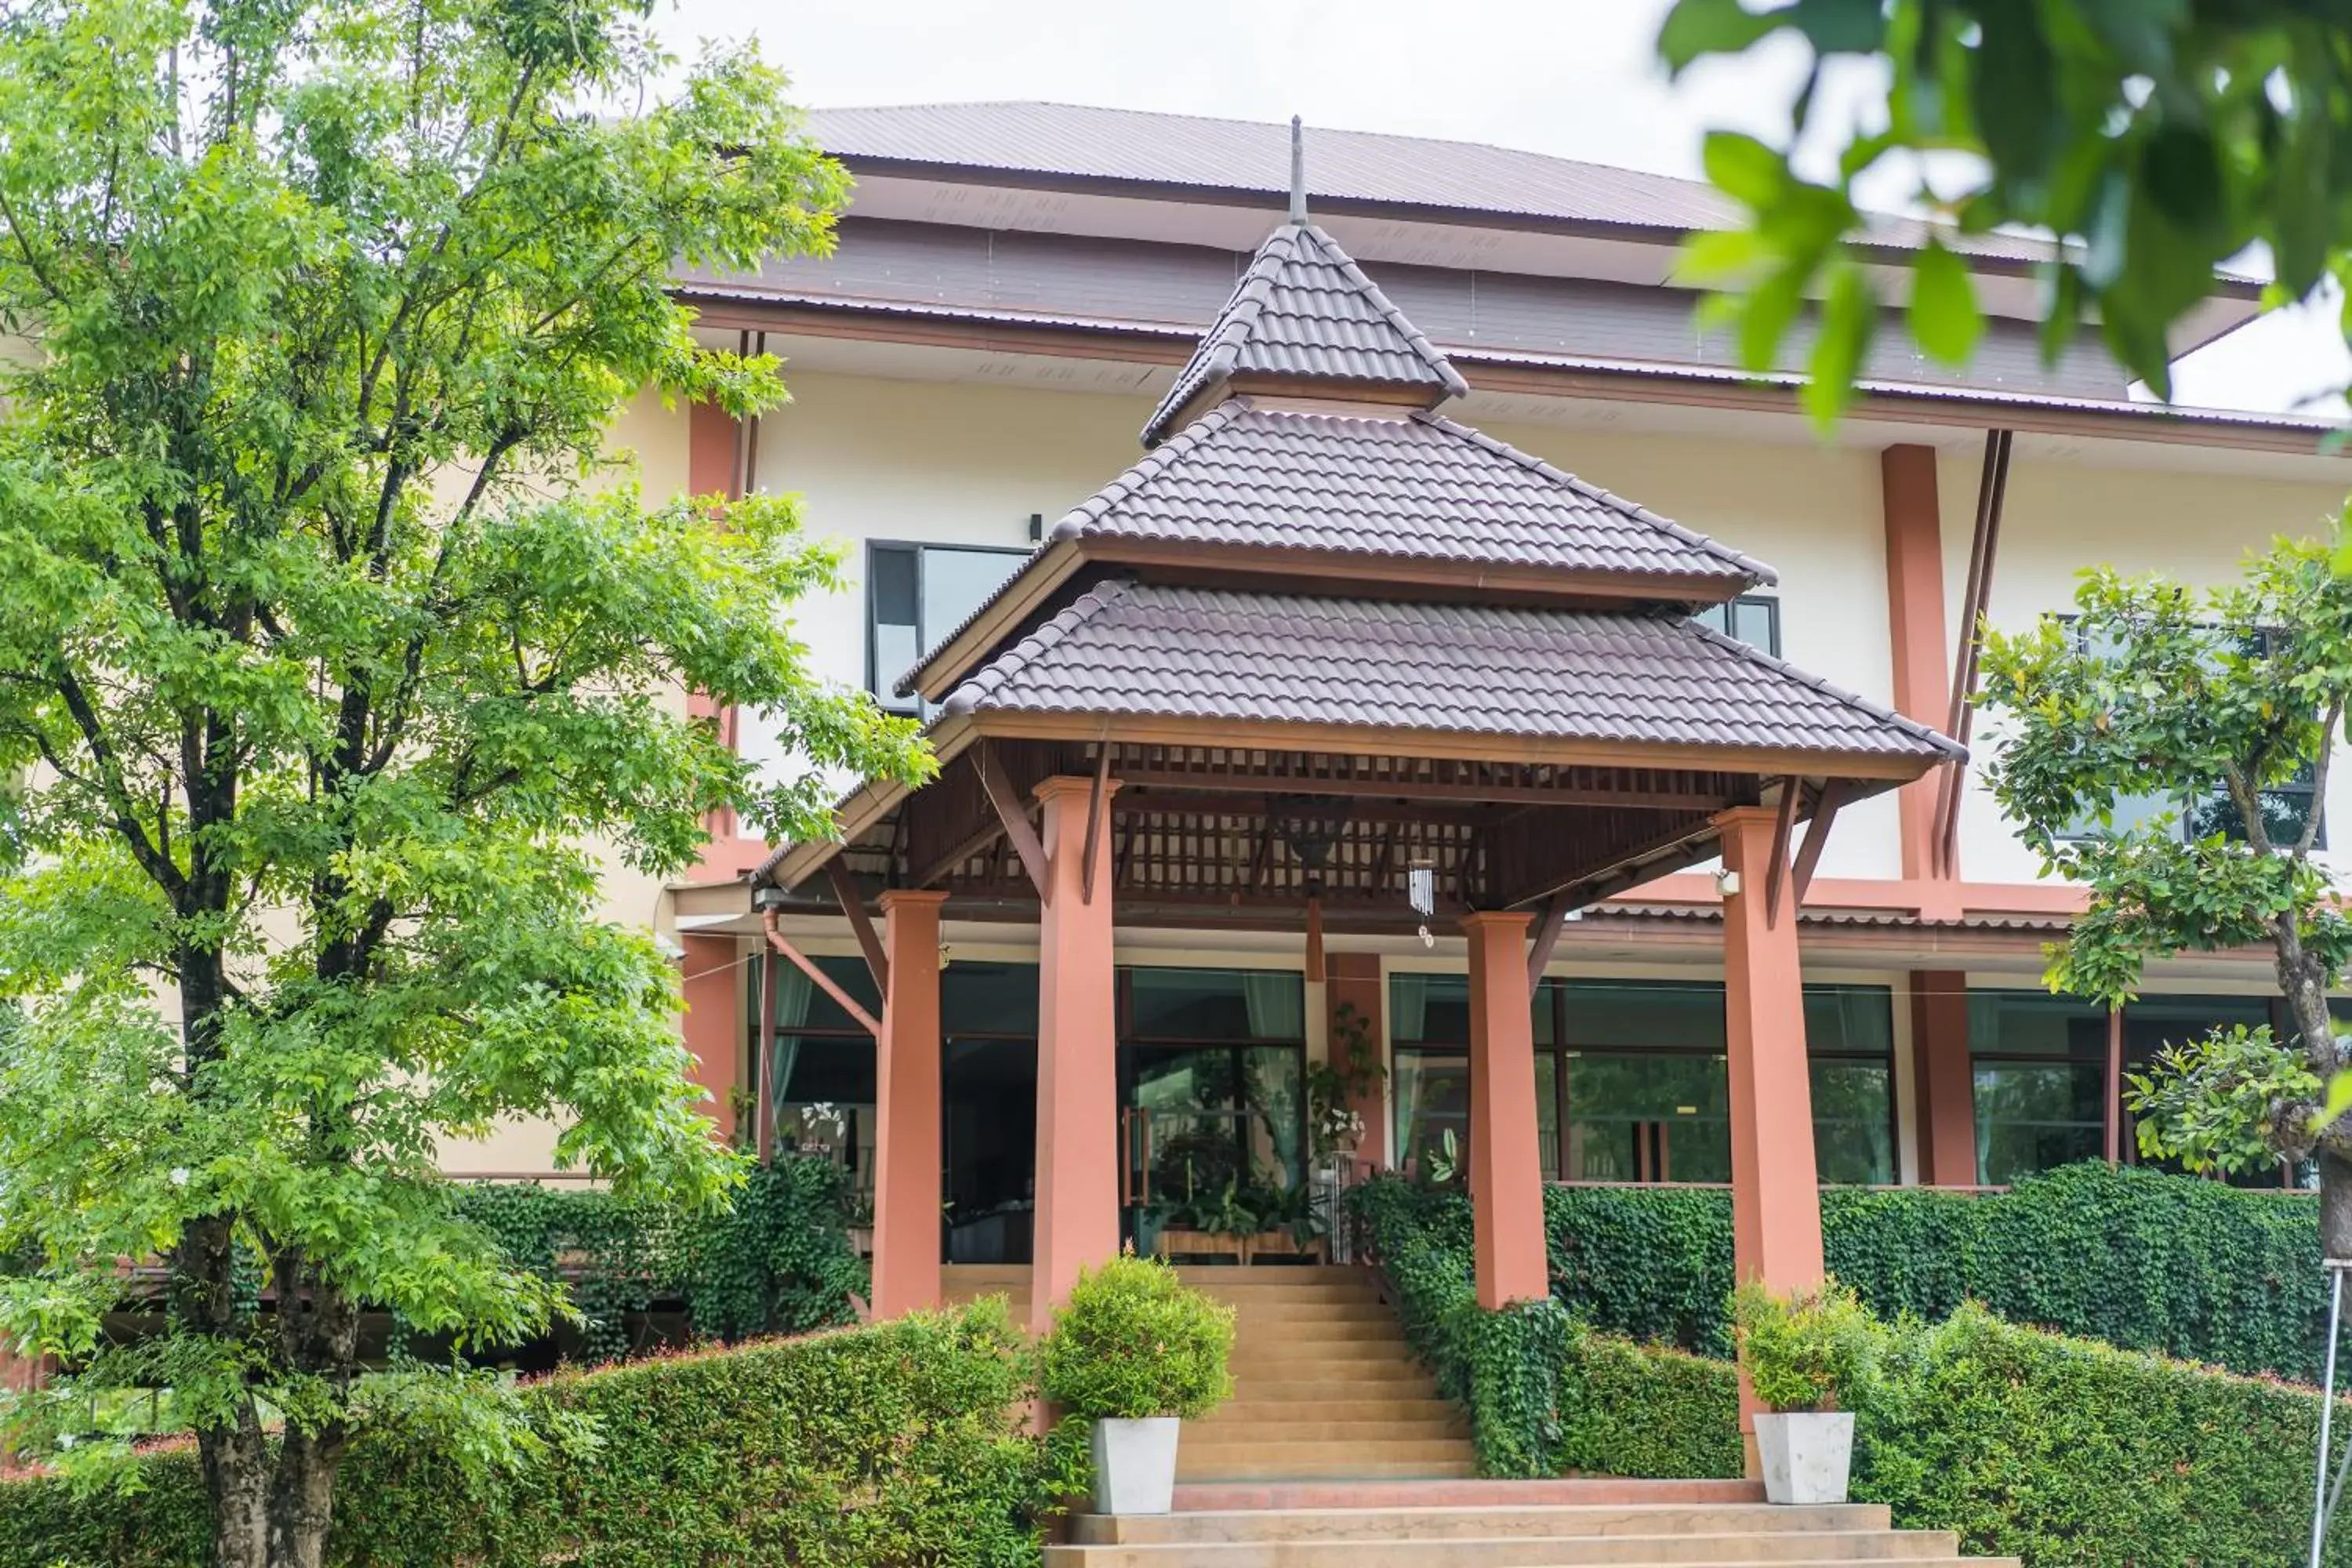 Property Building in Phufa Waree Chiangrai Resort - SHA Extra Plus